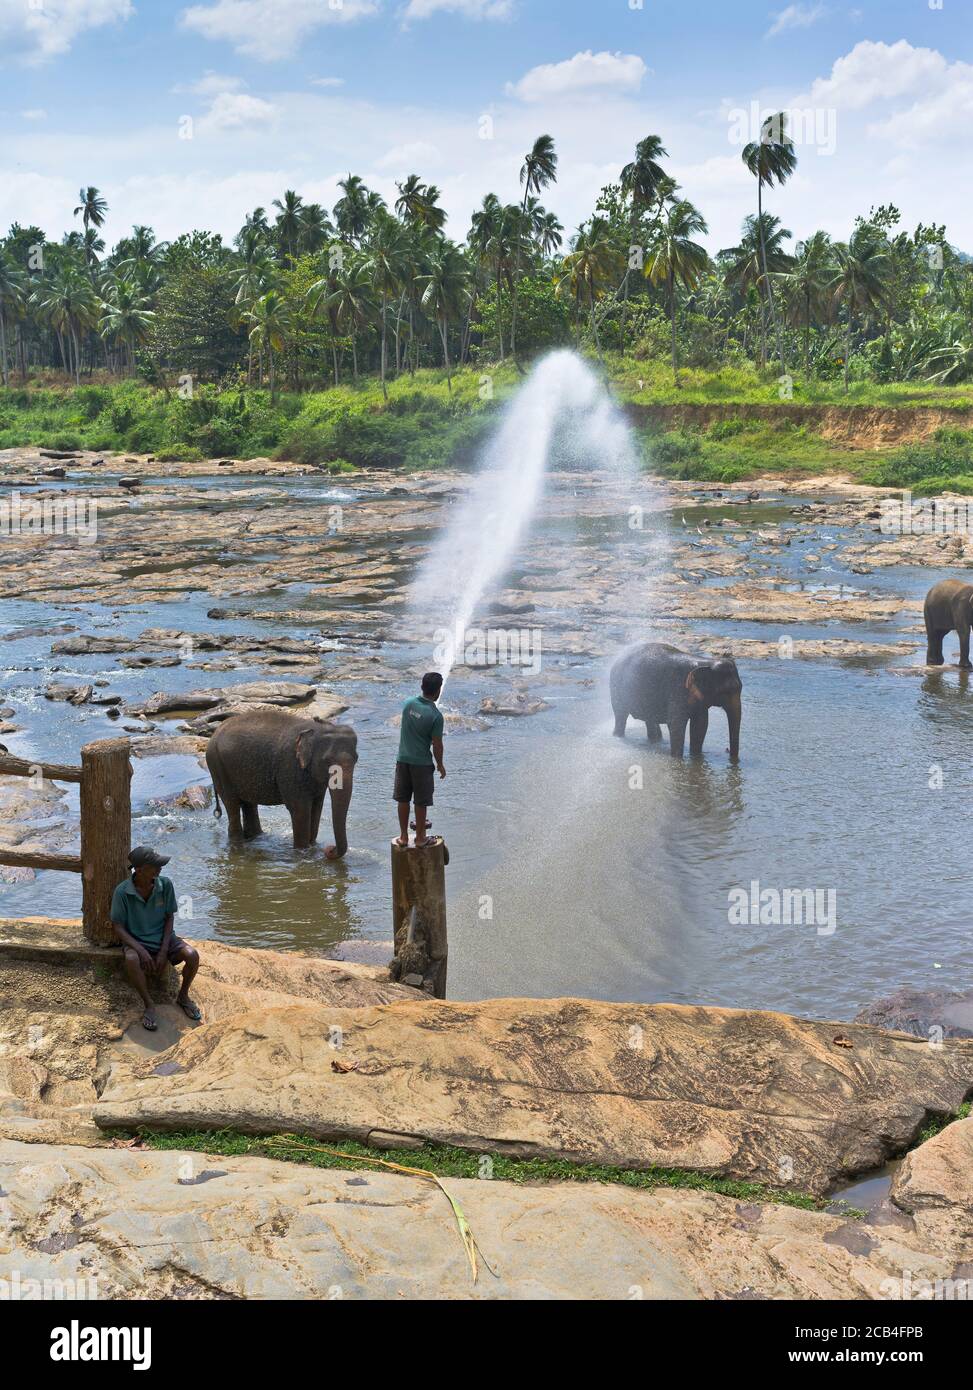 dh Elephant Orphanage PINNAWALA SRI LANKA Bathing time herd of elephants in river spraying water spray wash watering hole Stock Photo